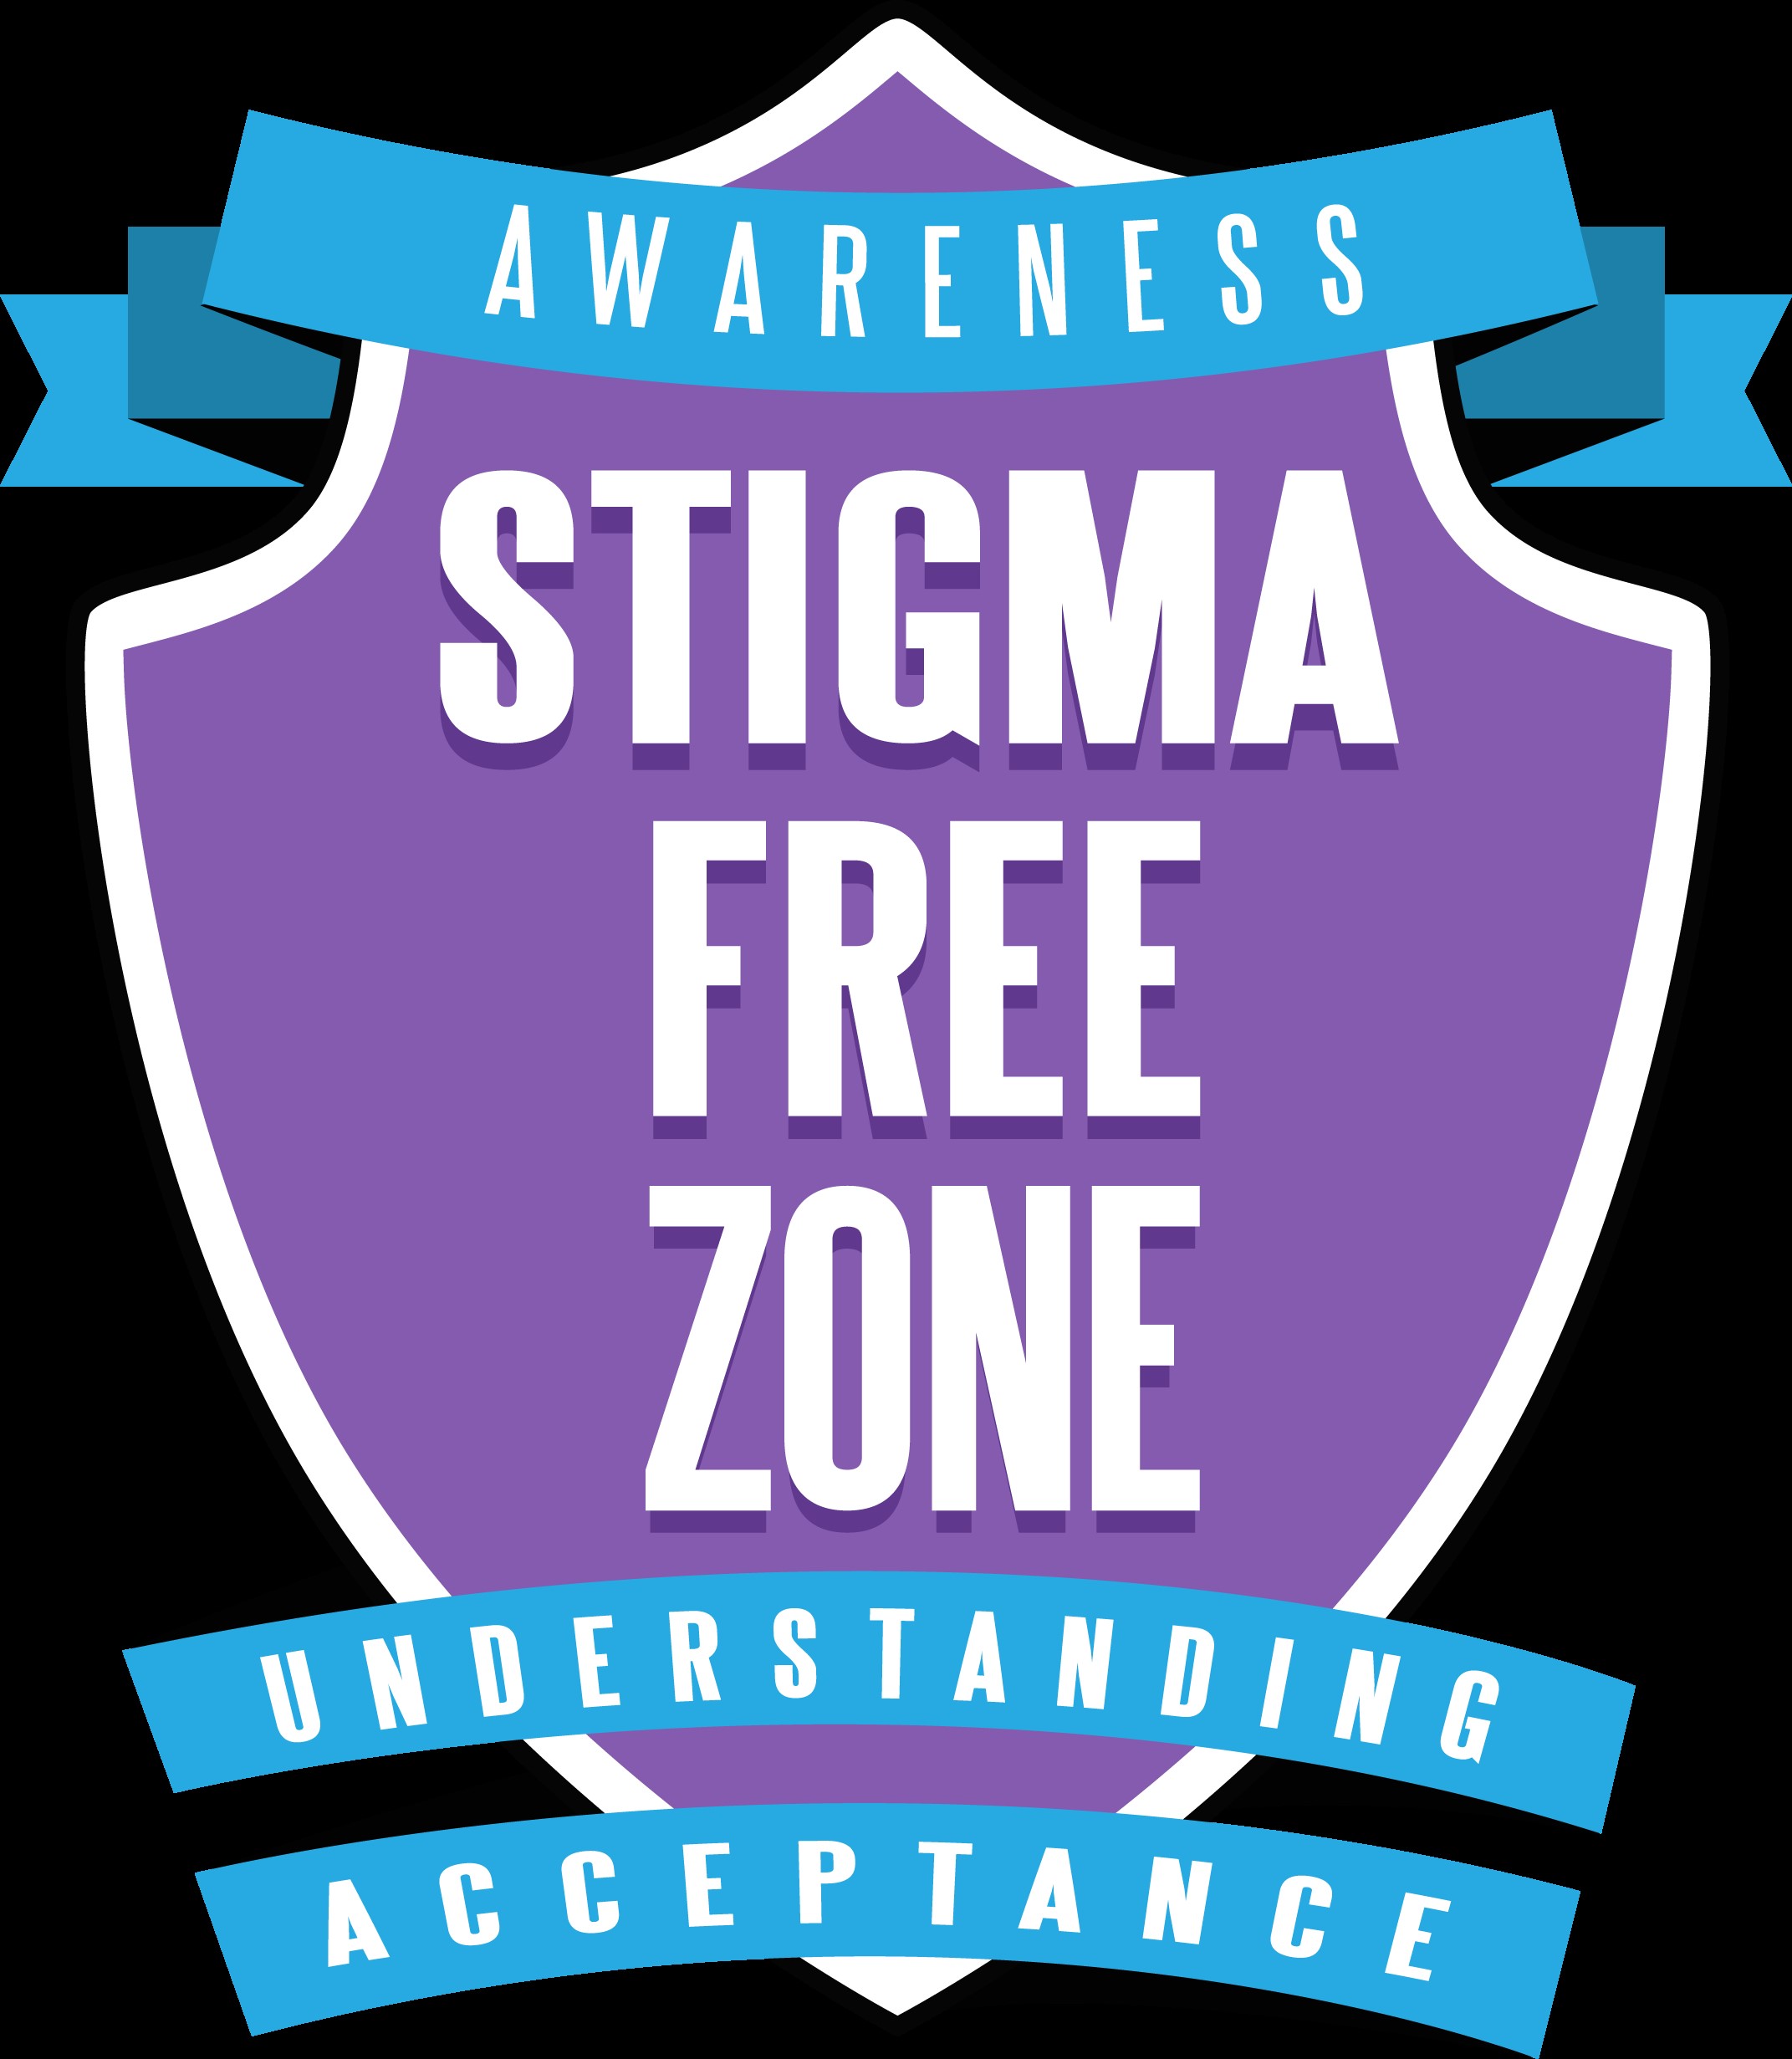 AutismBC is Working Towards a Stigma-Free Zone Designation